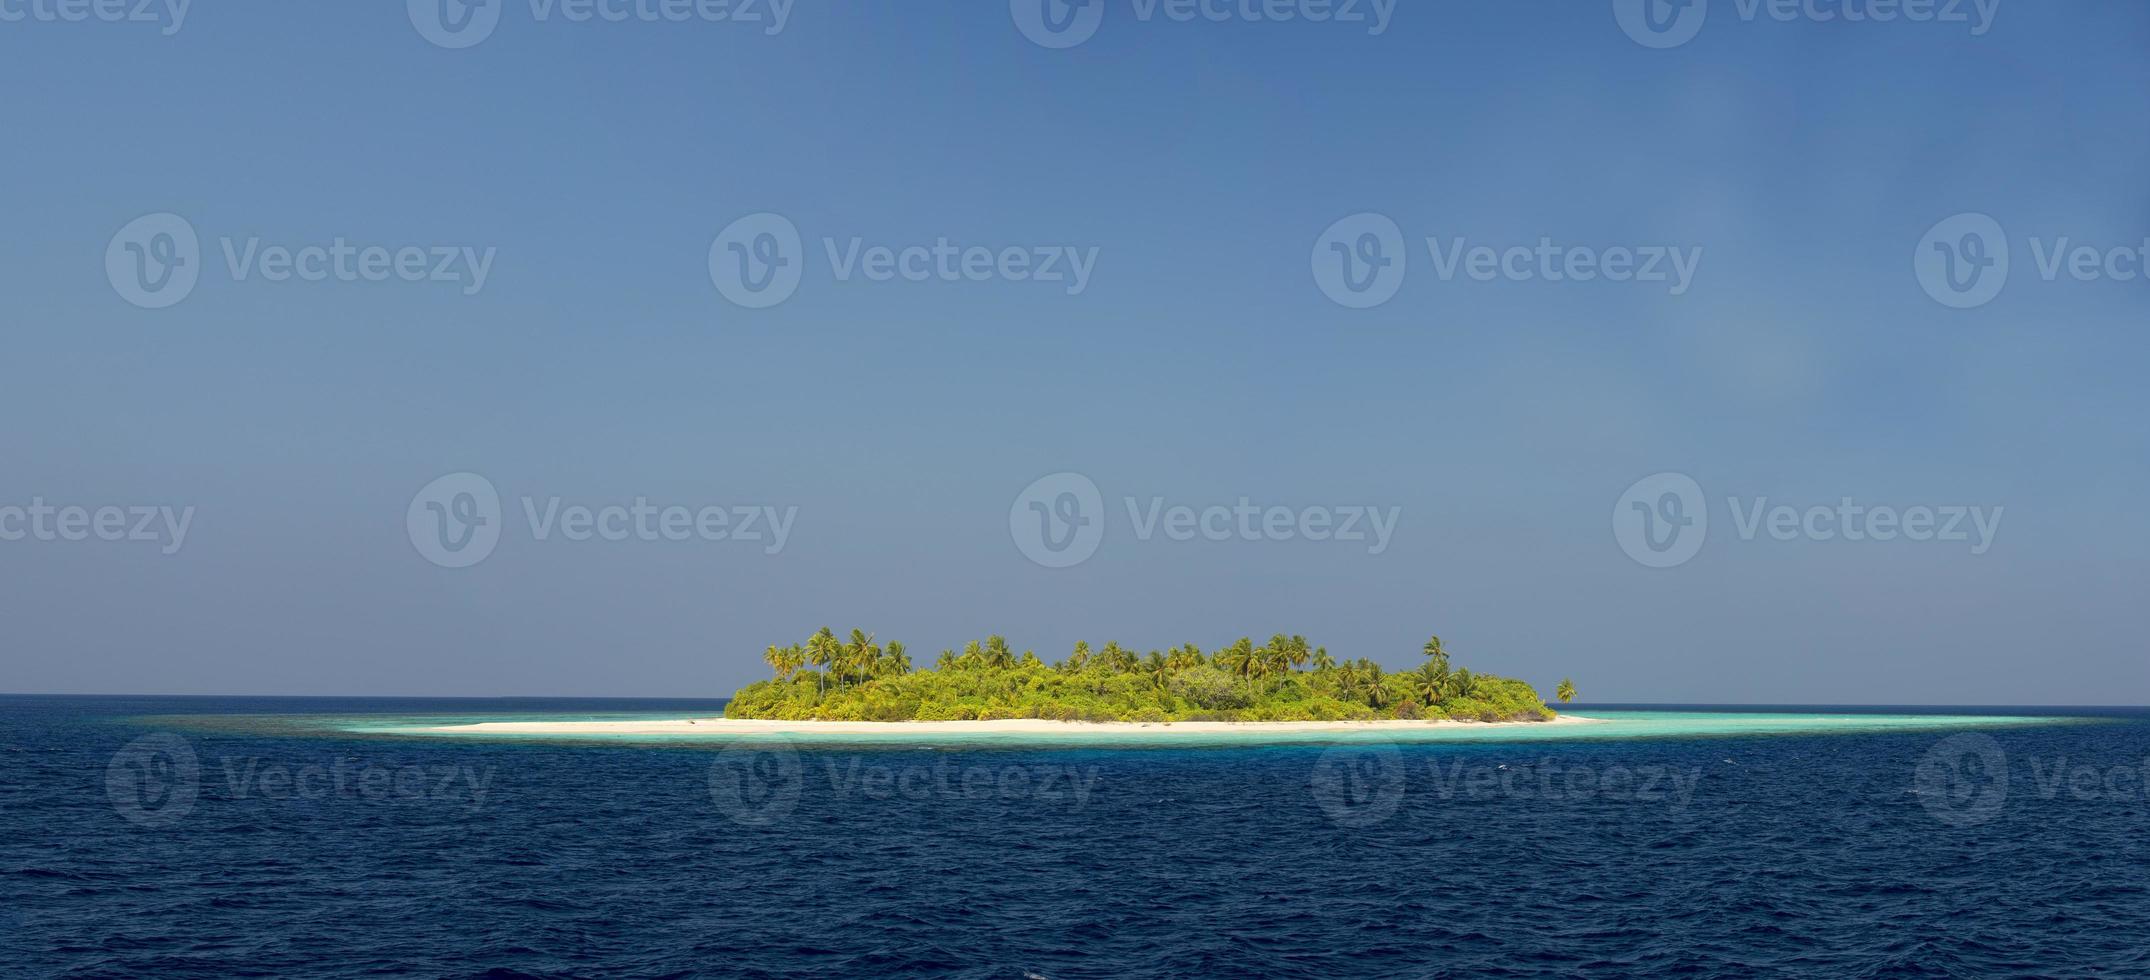 Maldiven tropisch paradijs strand kristal water wit zand strand foto